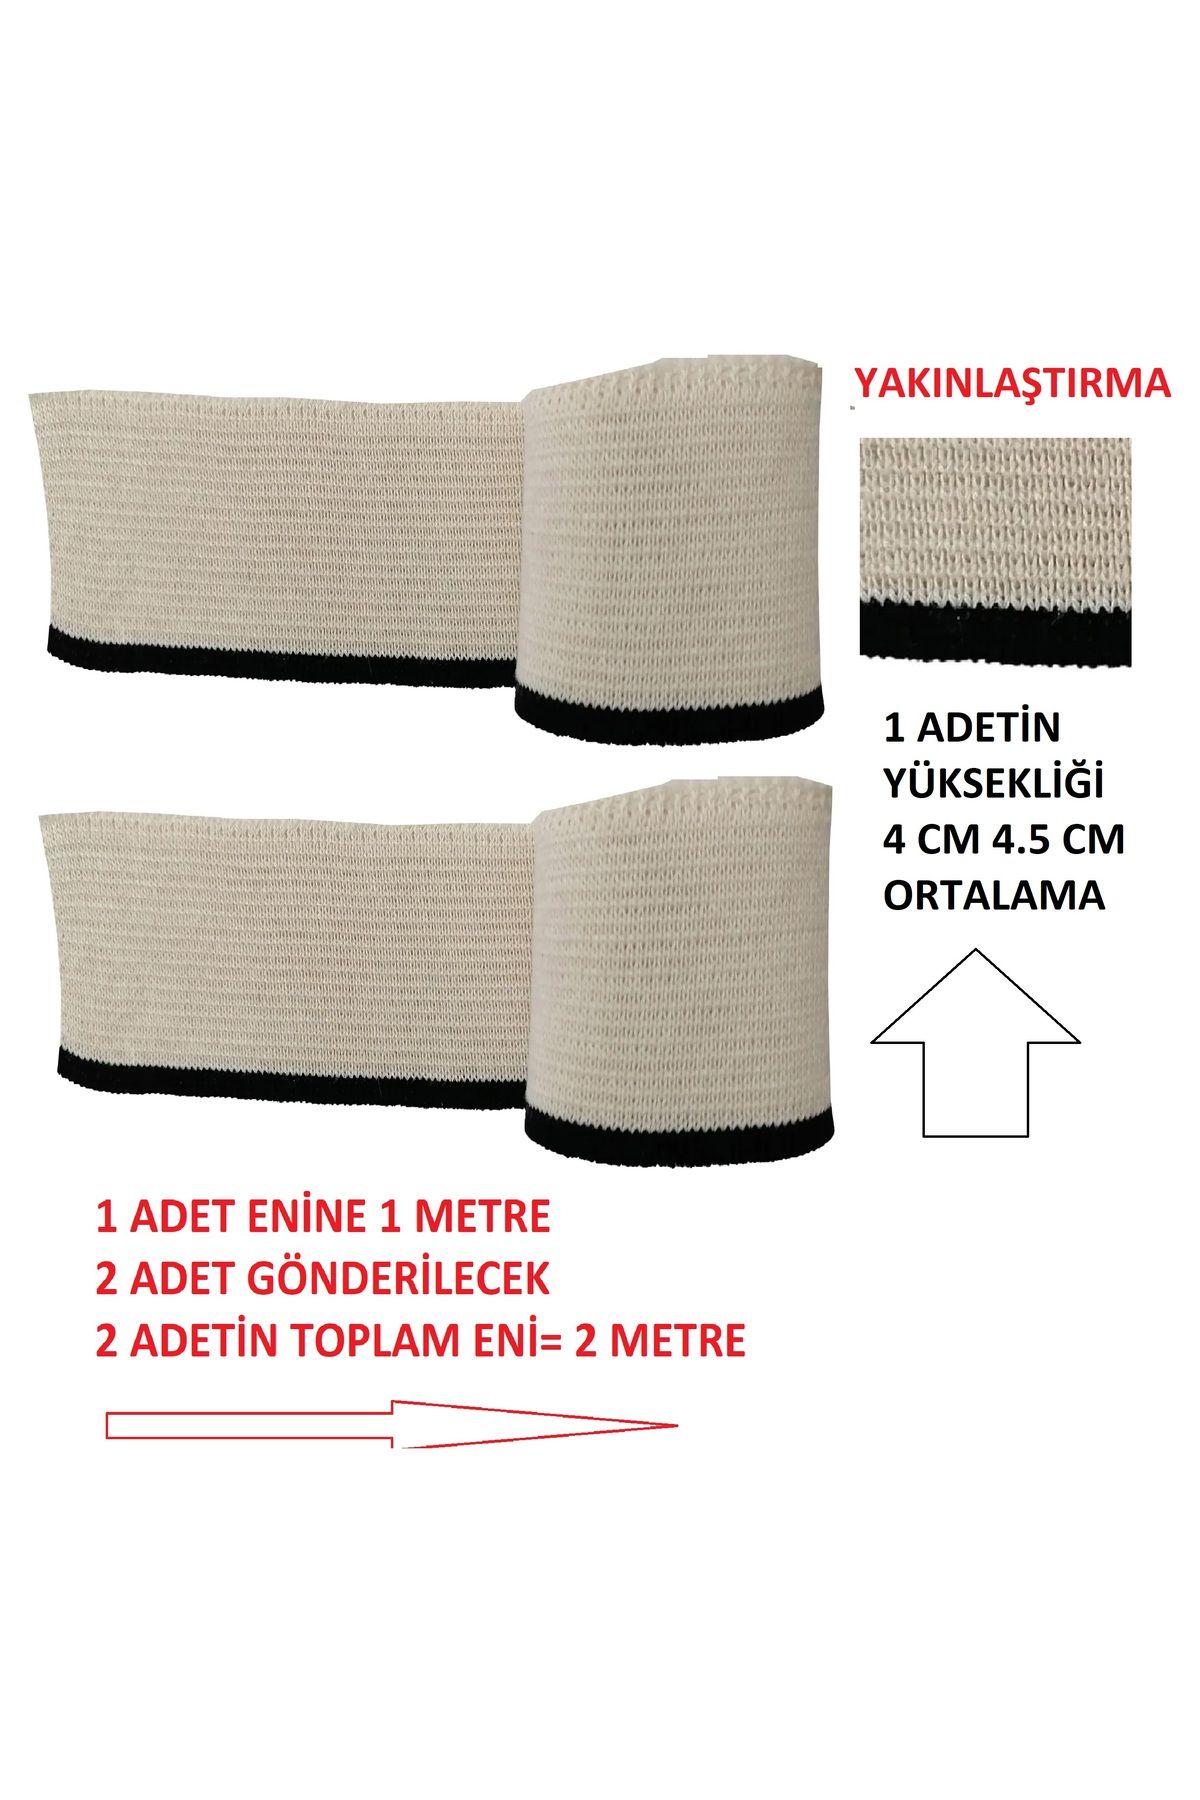 U5 FASHION Ribana Kumaş (TRİKO DOKUMA) Hobi Tasarım Malzemesi Ribana Uzun Şerit Bant ( 2 Adet)